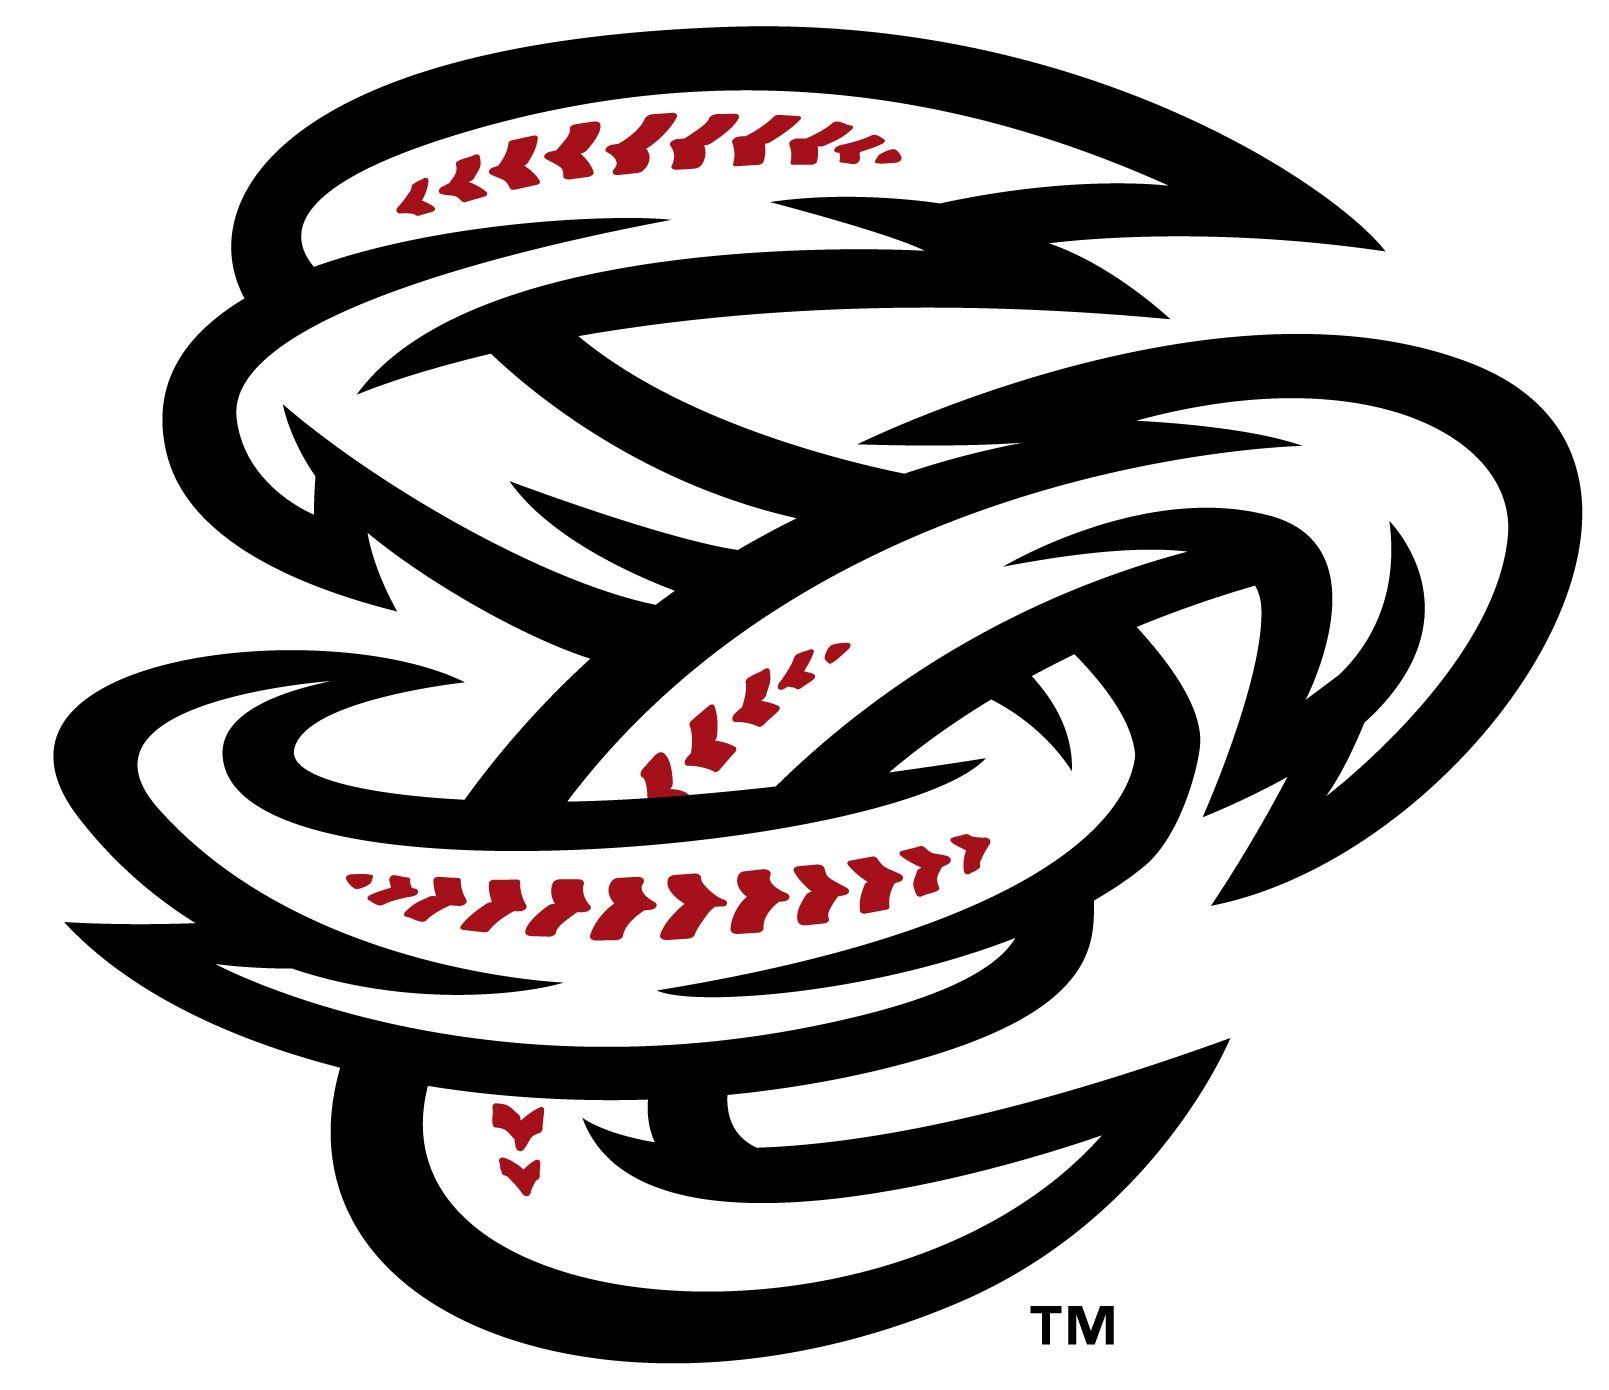 Cool Baseball Logo - Need logo, caps and Jerseys - OOTP Developments Forums